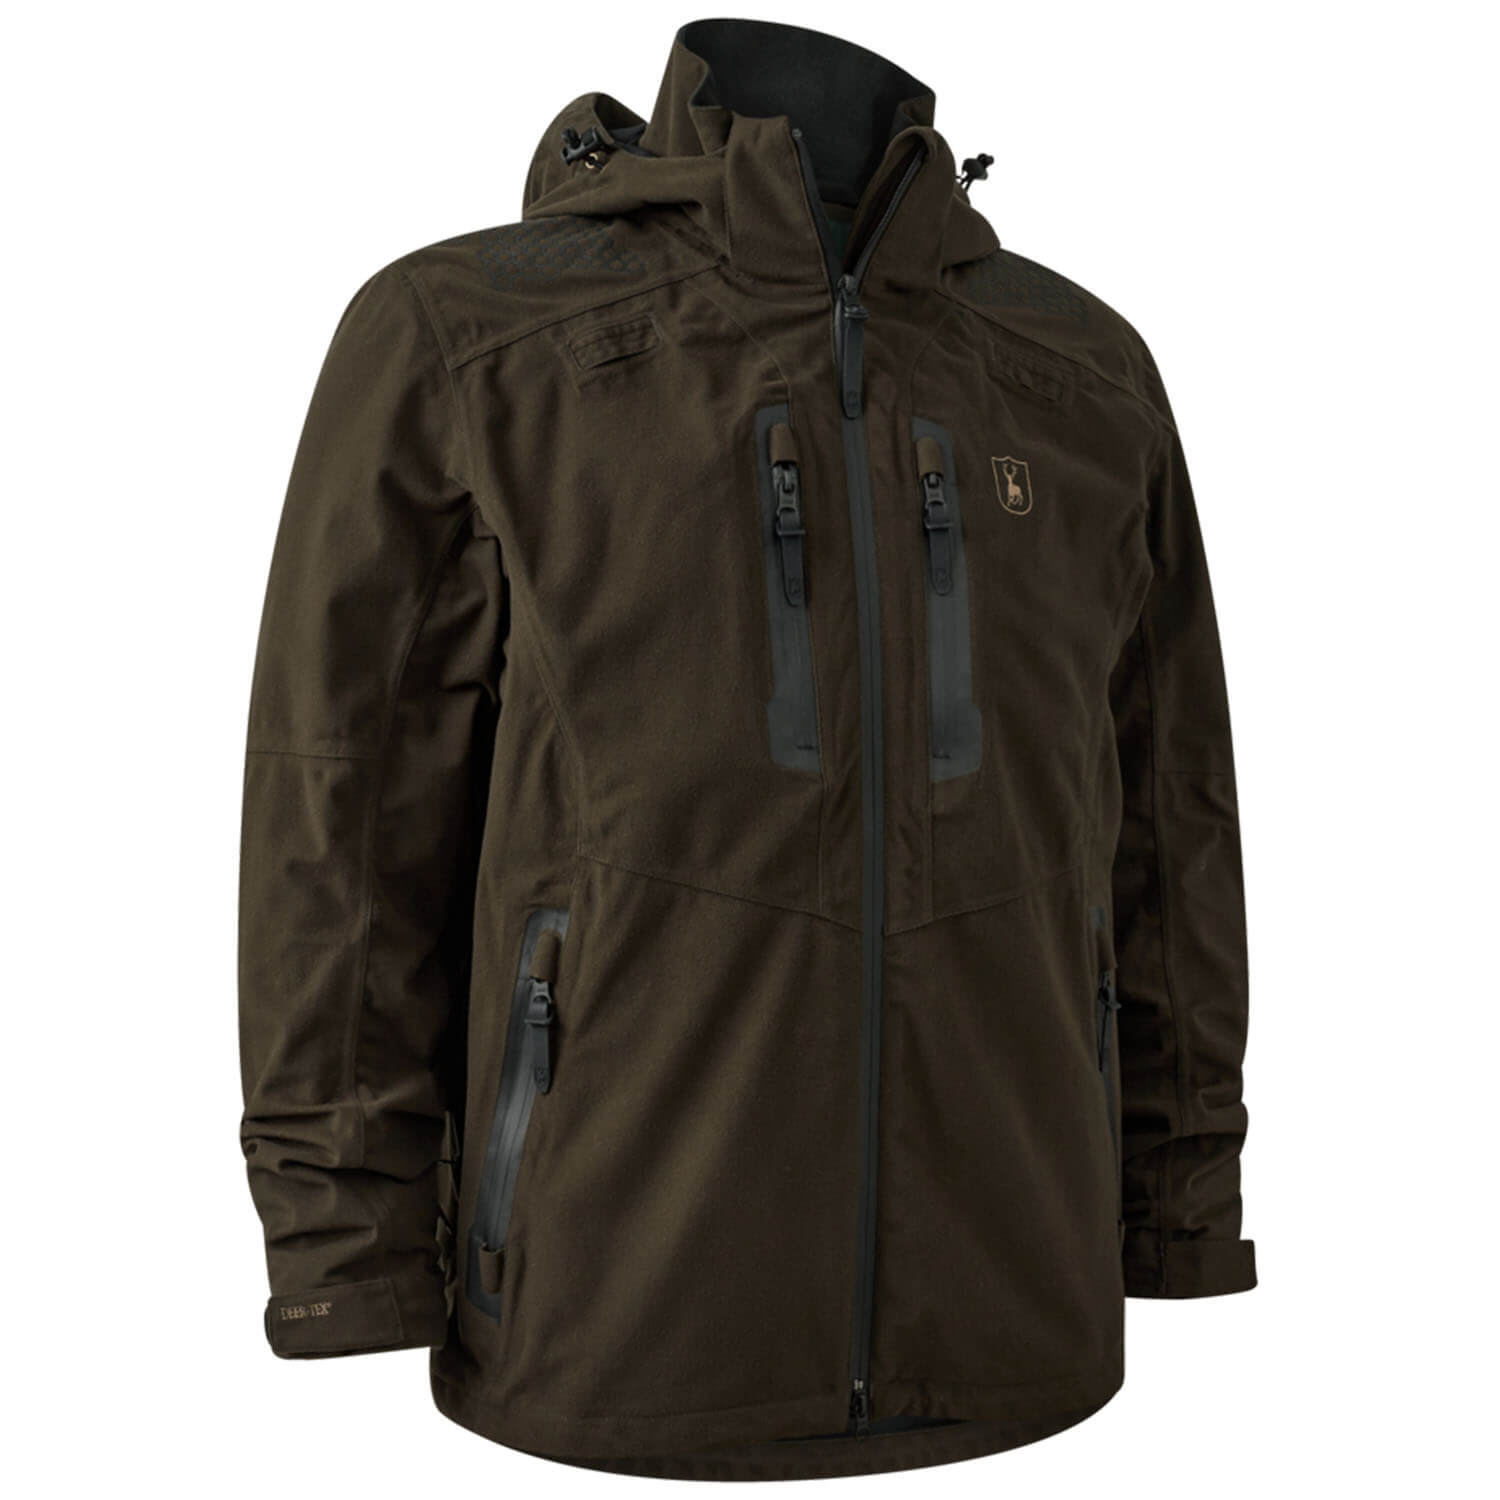  Deerhunter Game Pro Light hunting jacket (Wood) - Hunting Jackets